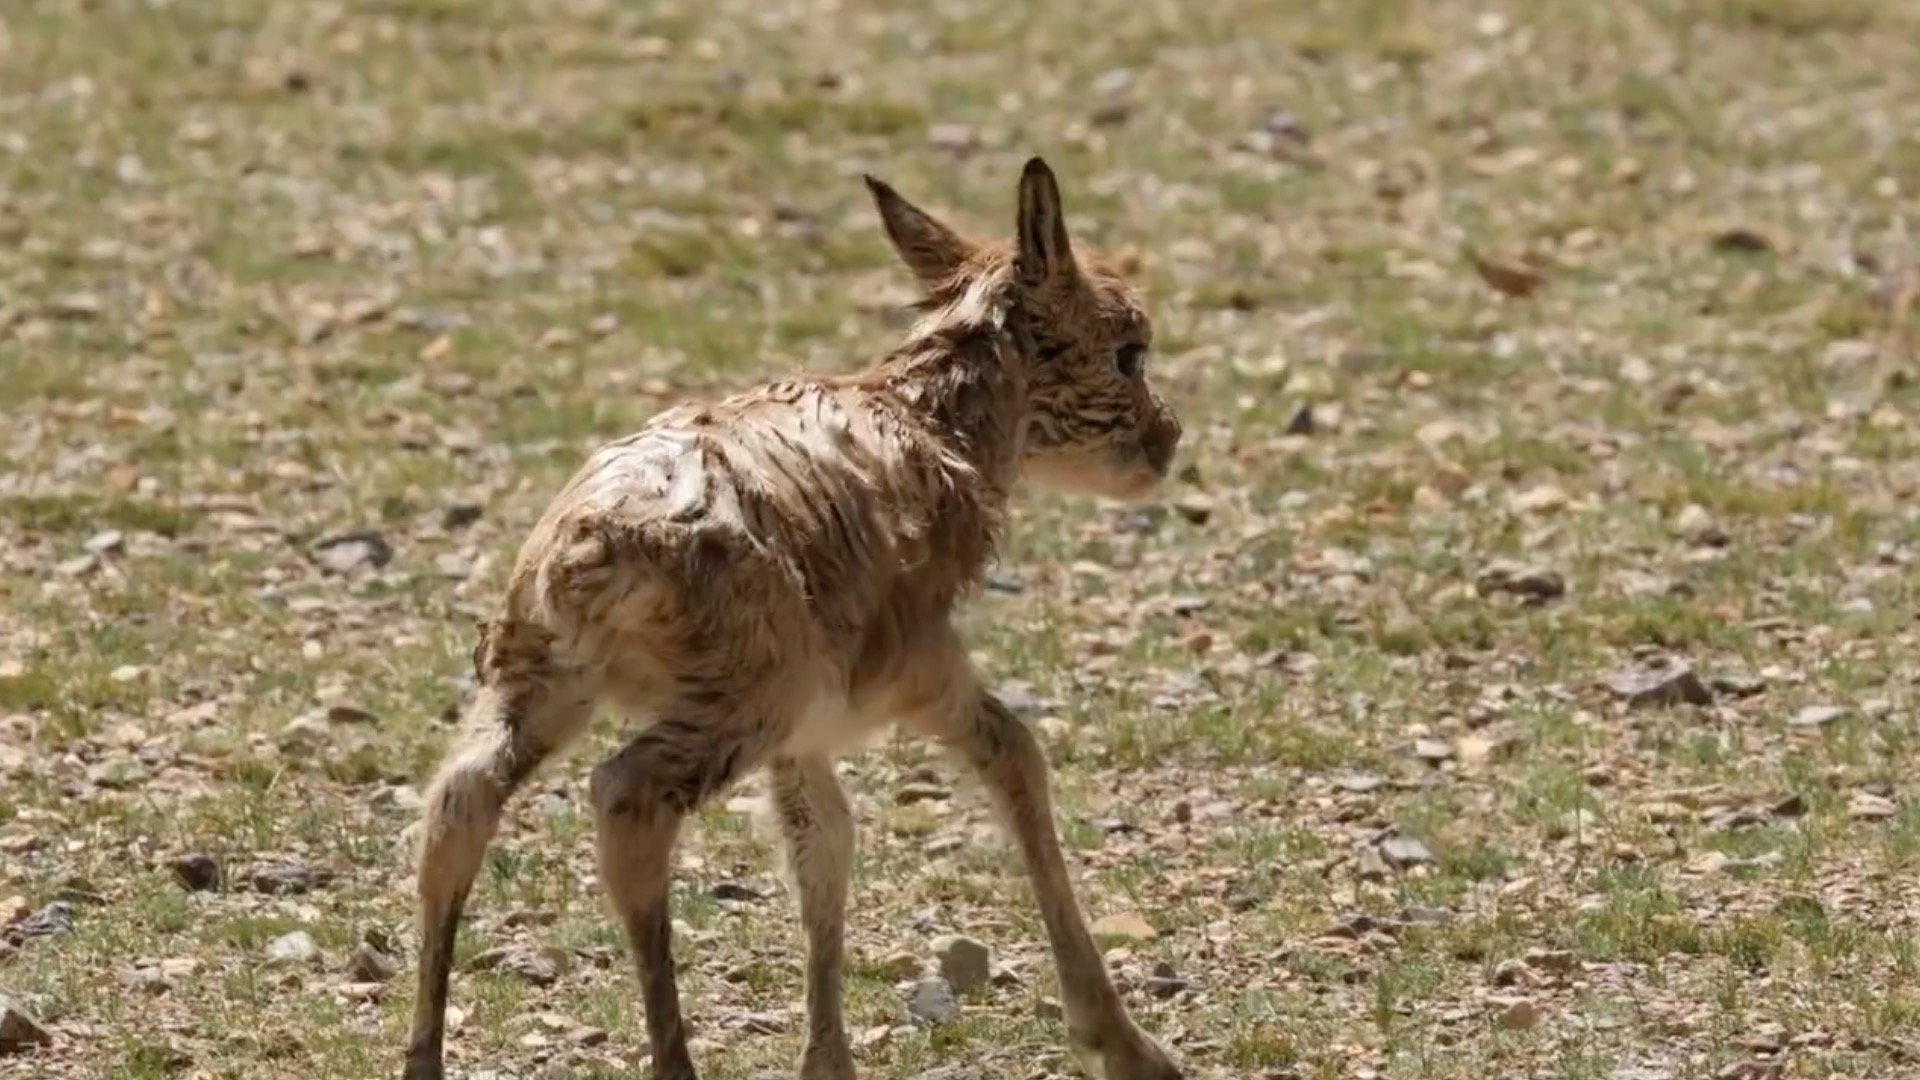 tibetan antelope baby